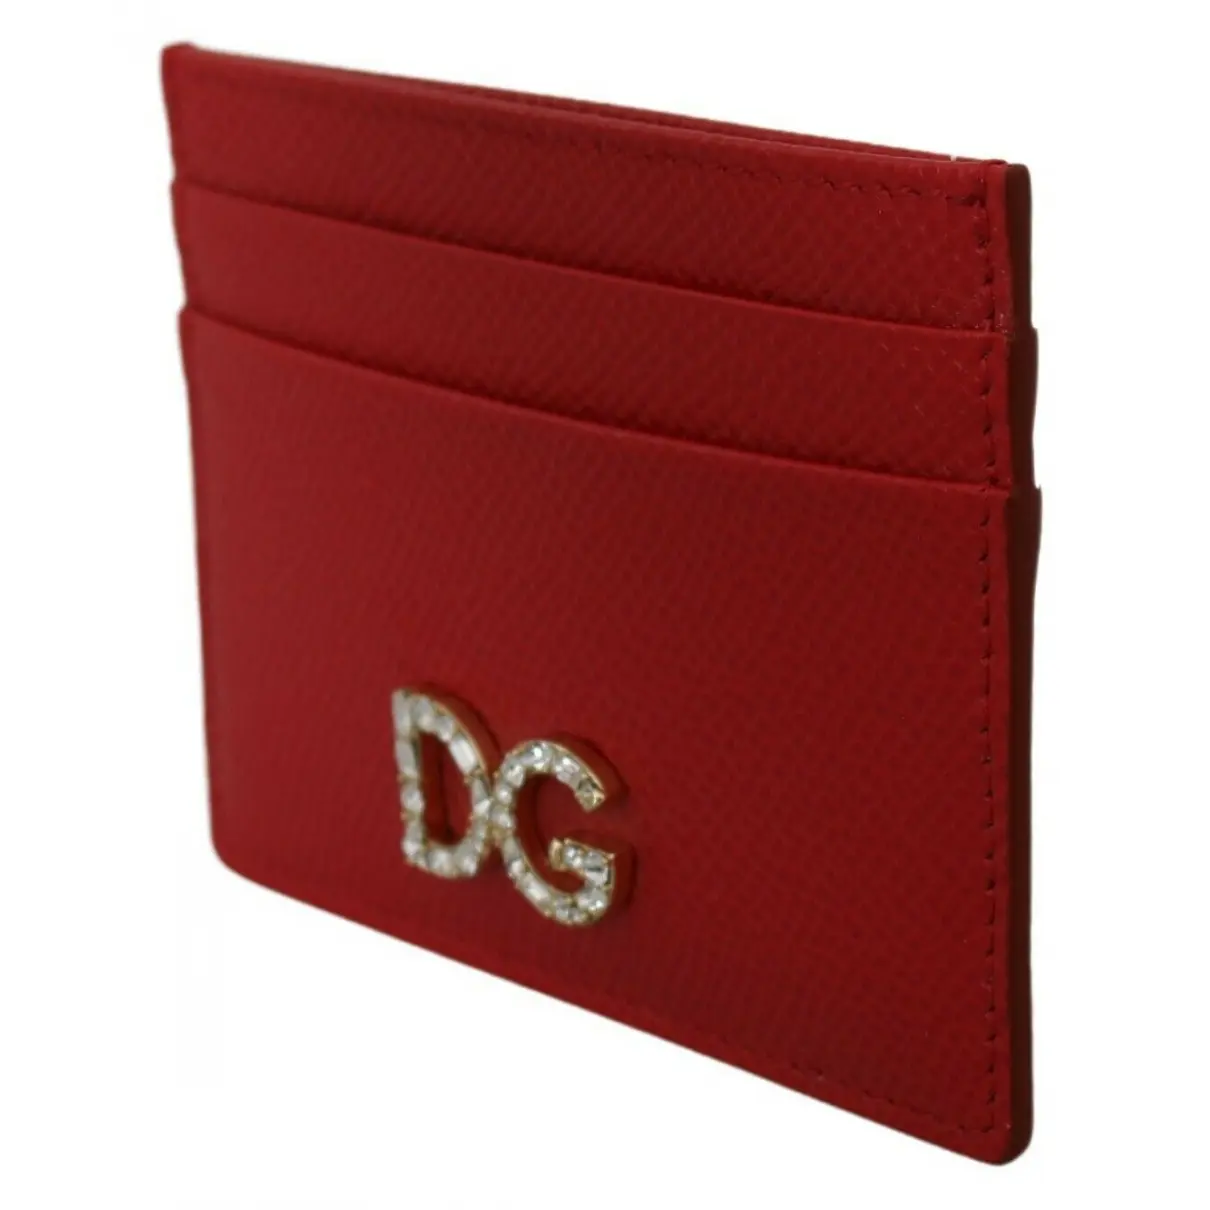 Buy Dolce & Gabbana Leather purse online